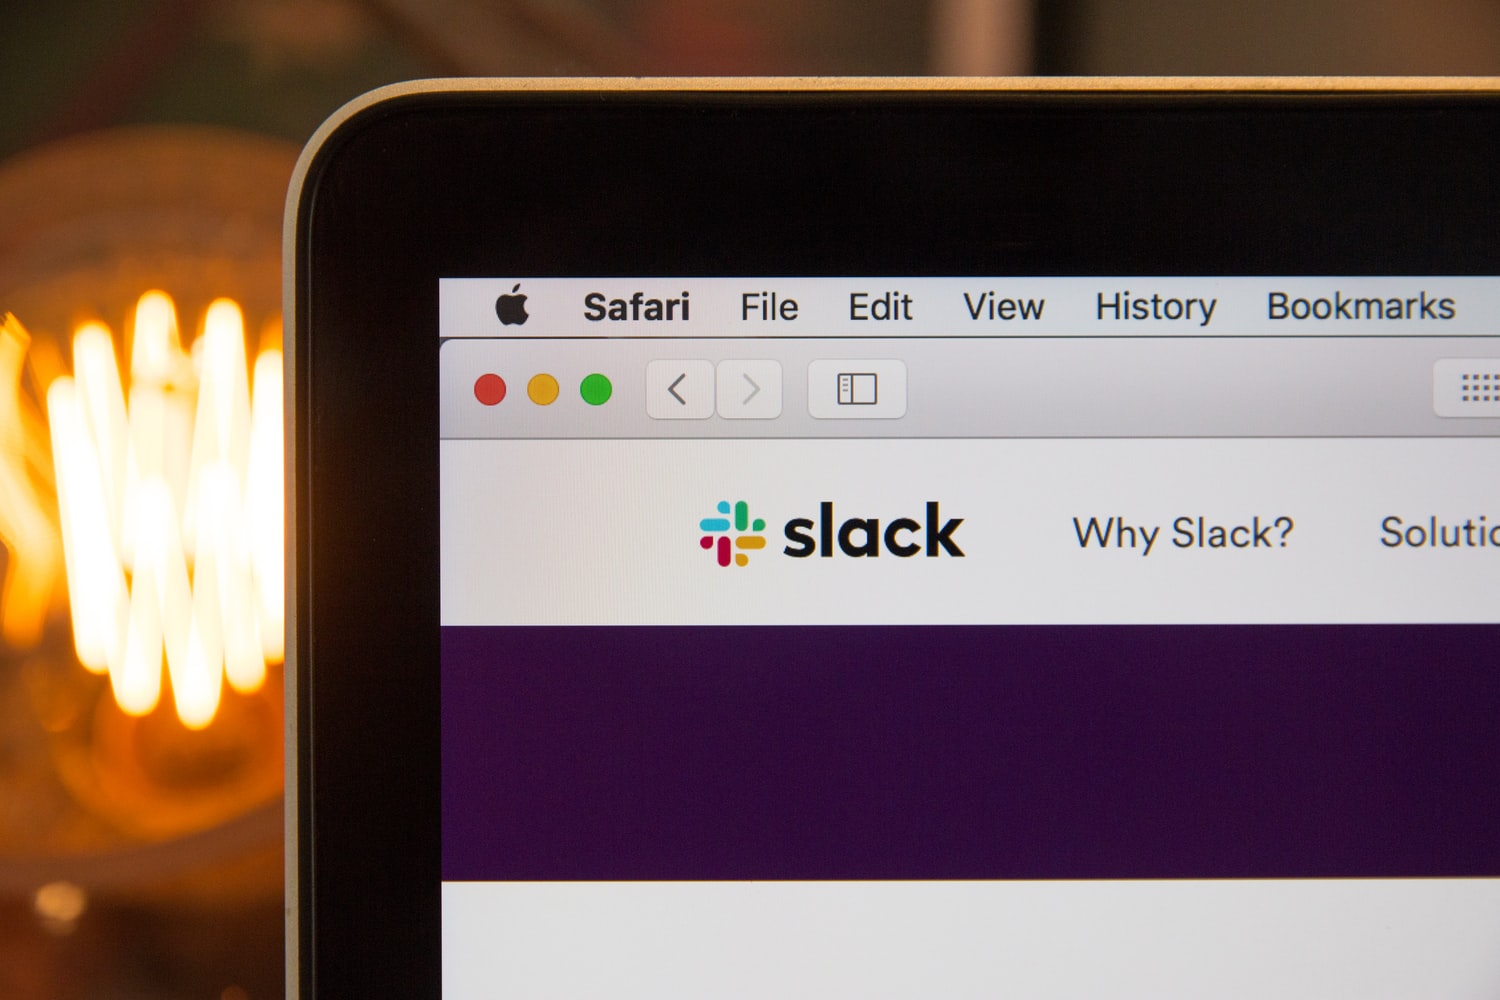 Slack webpage open in Safari web browser